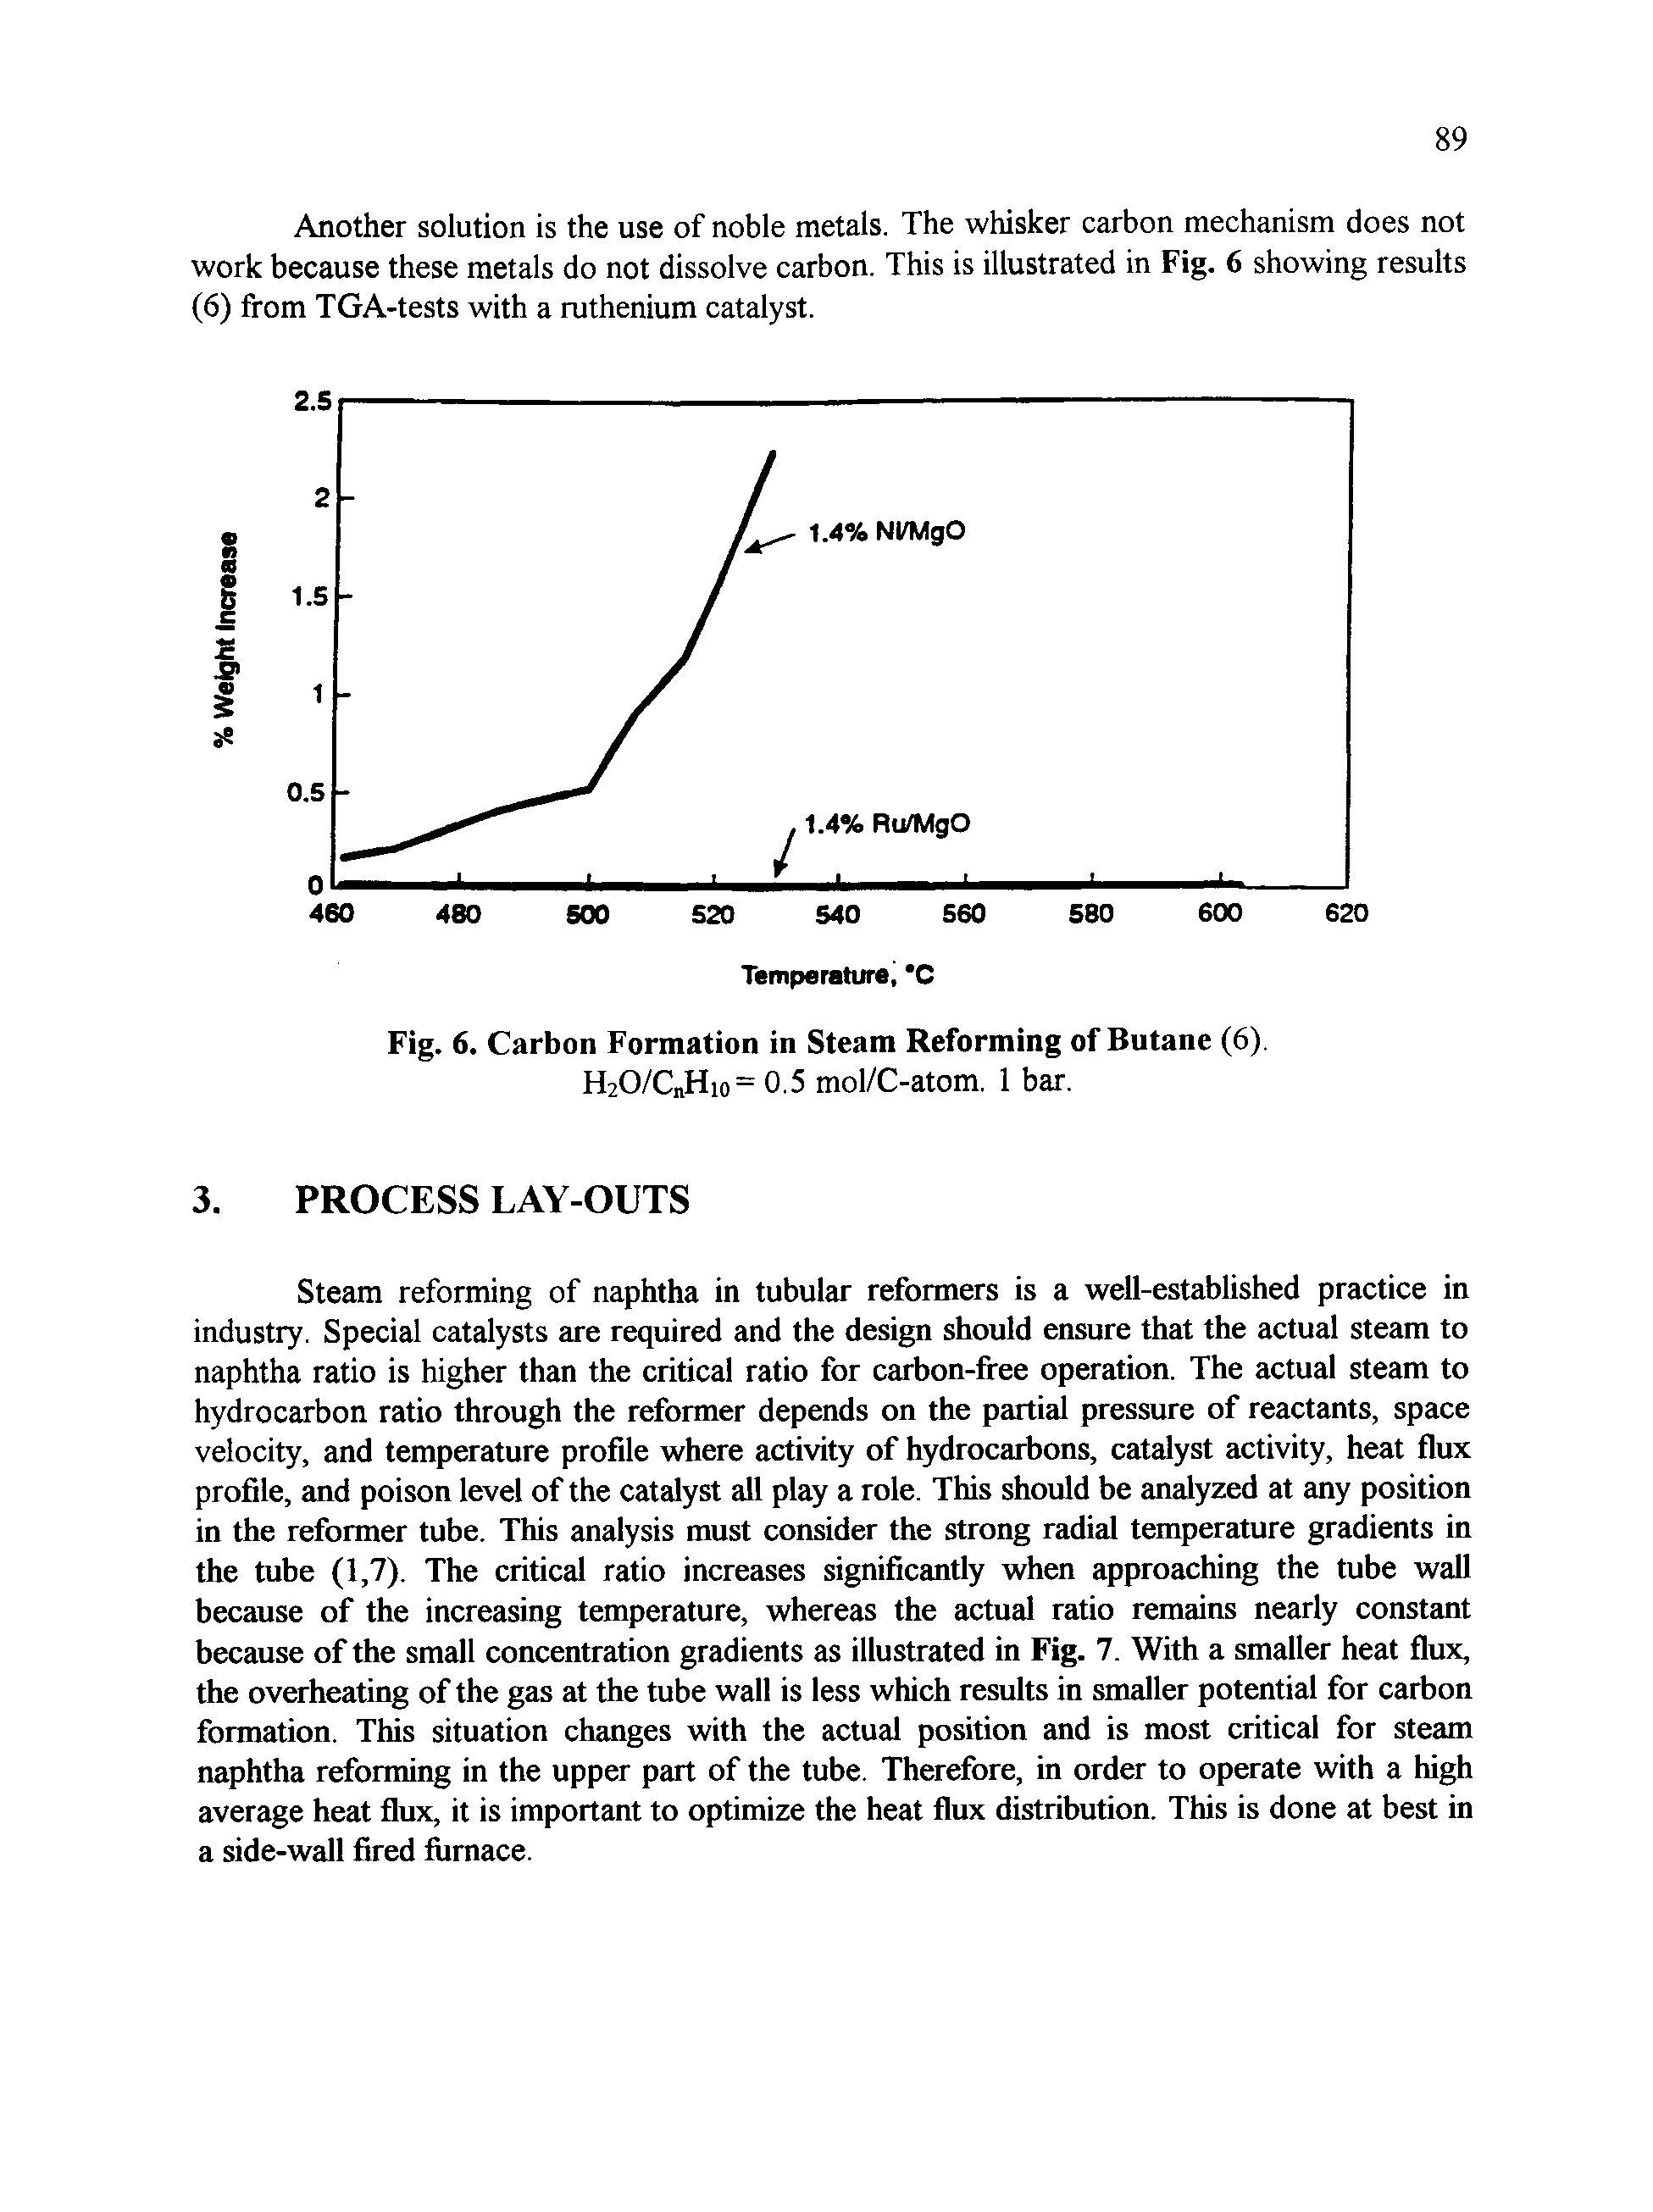 Fig. 6. Carbon Formation in Steam Reforming of Butane (6). H20/C Hio= 0.5 mol/C-atom. 1 bar.